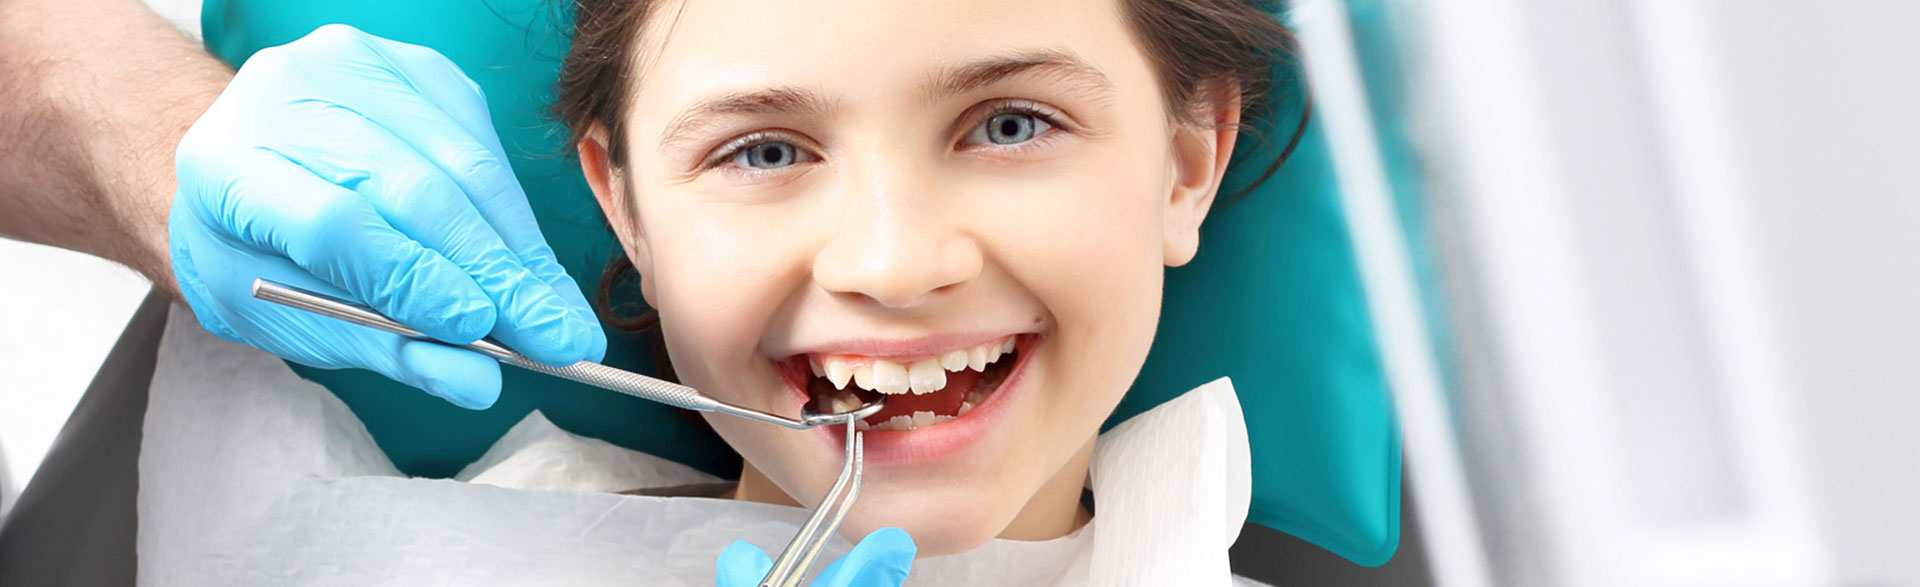 A girl is having interceptive orthodontics treatments